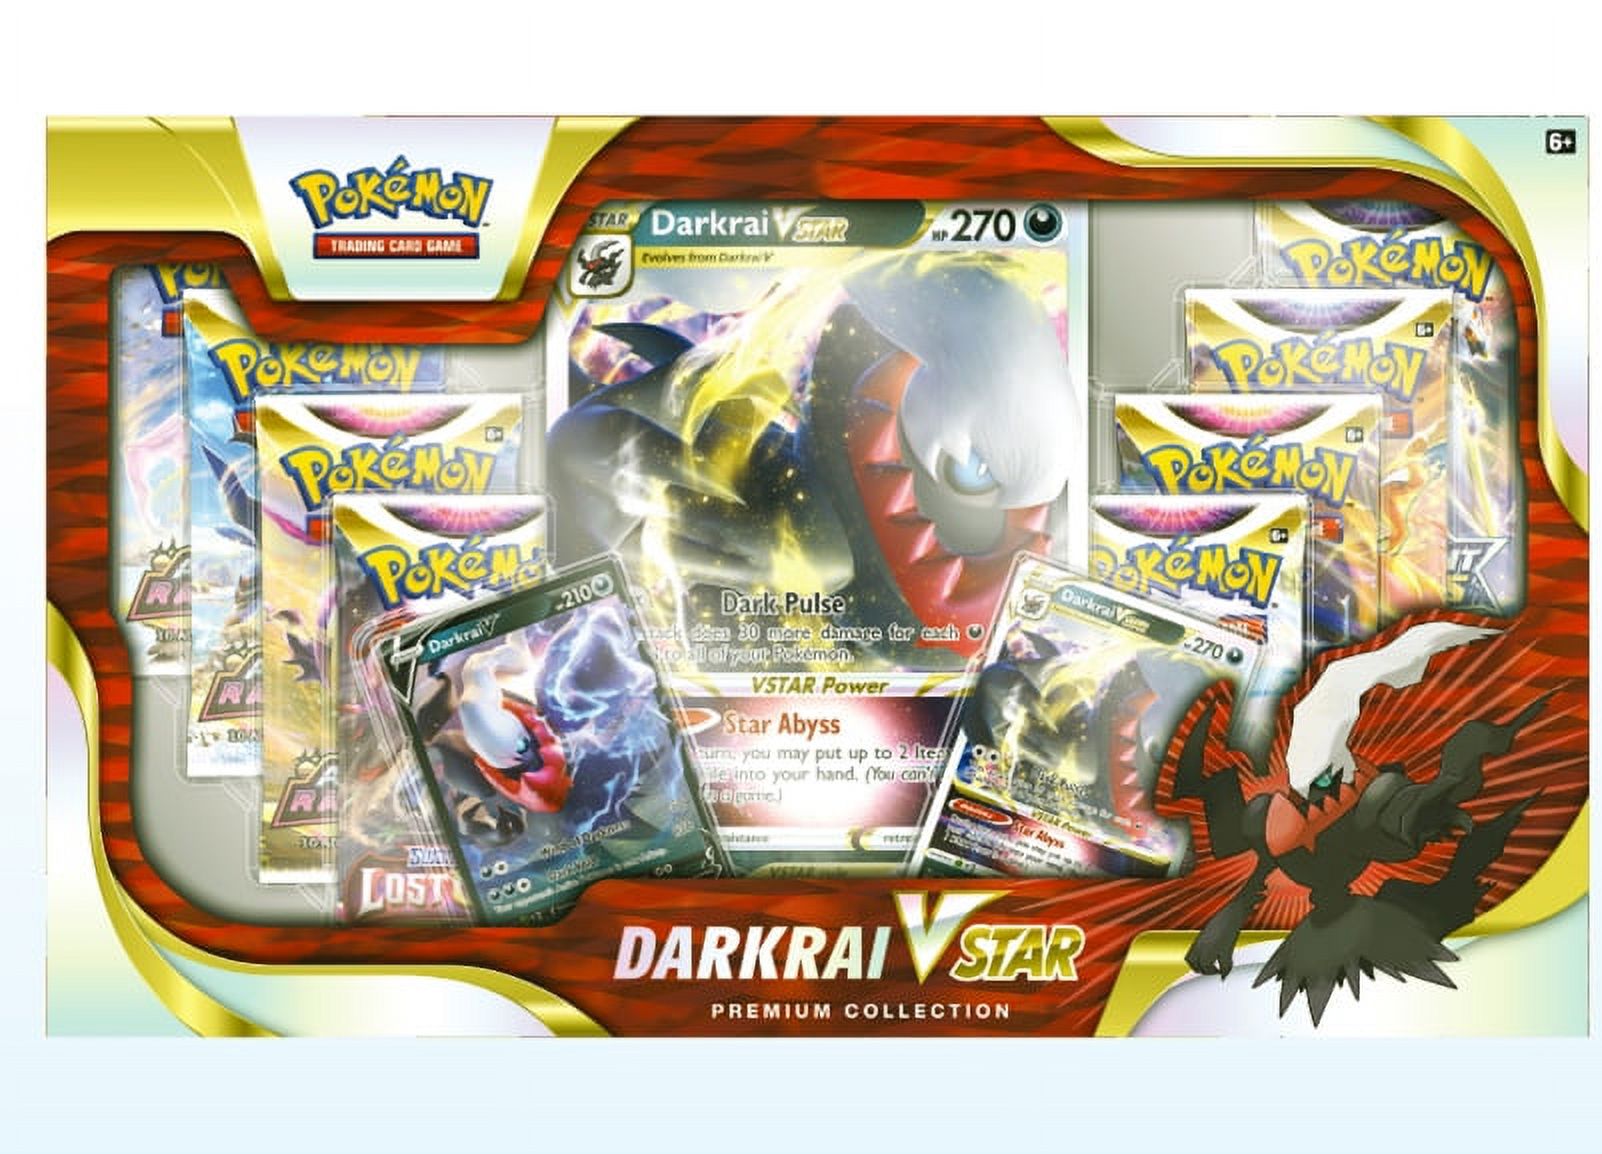 Pokemon Cards: Darkrai VSTAR Premium Collection Box Pokémon TCG - image 1 of 5